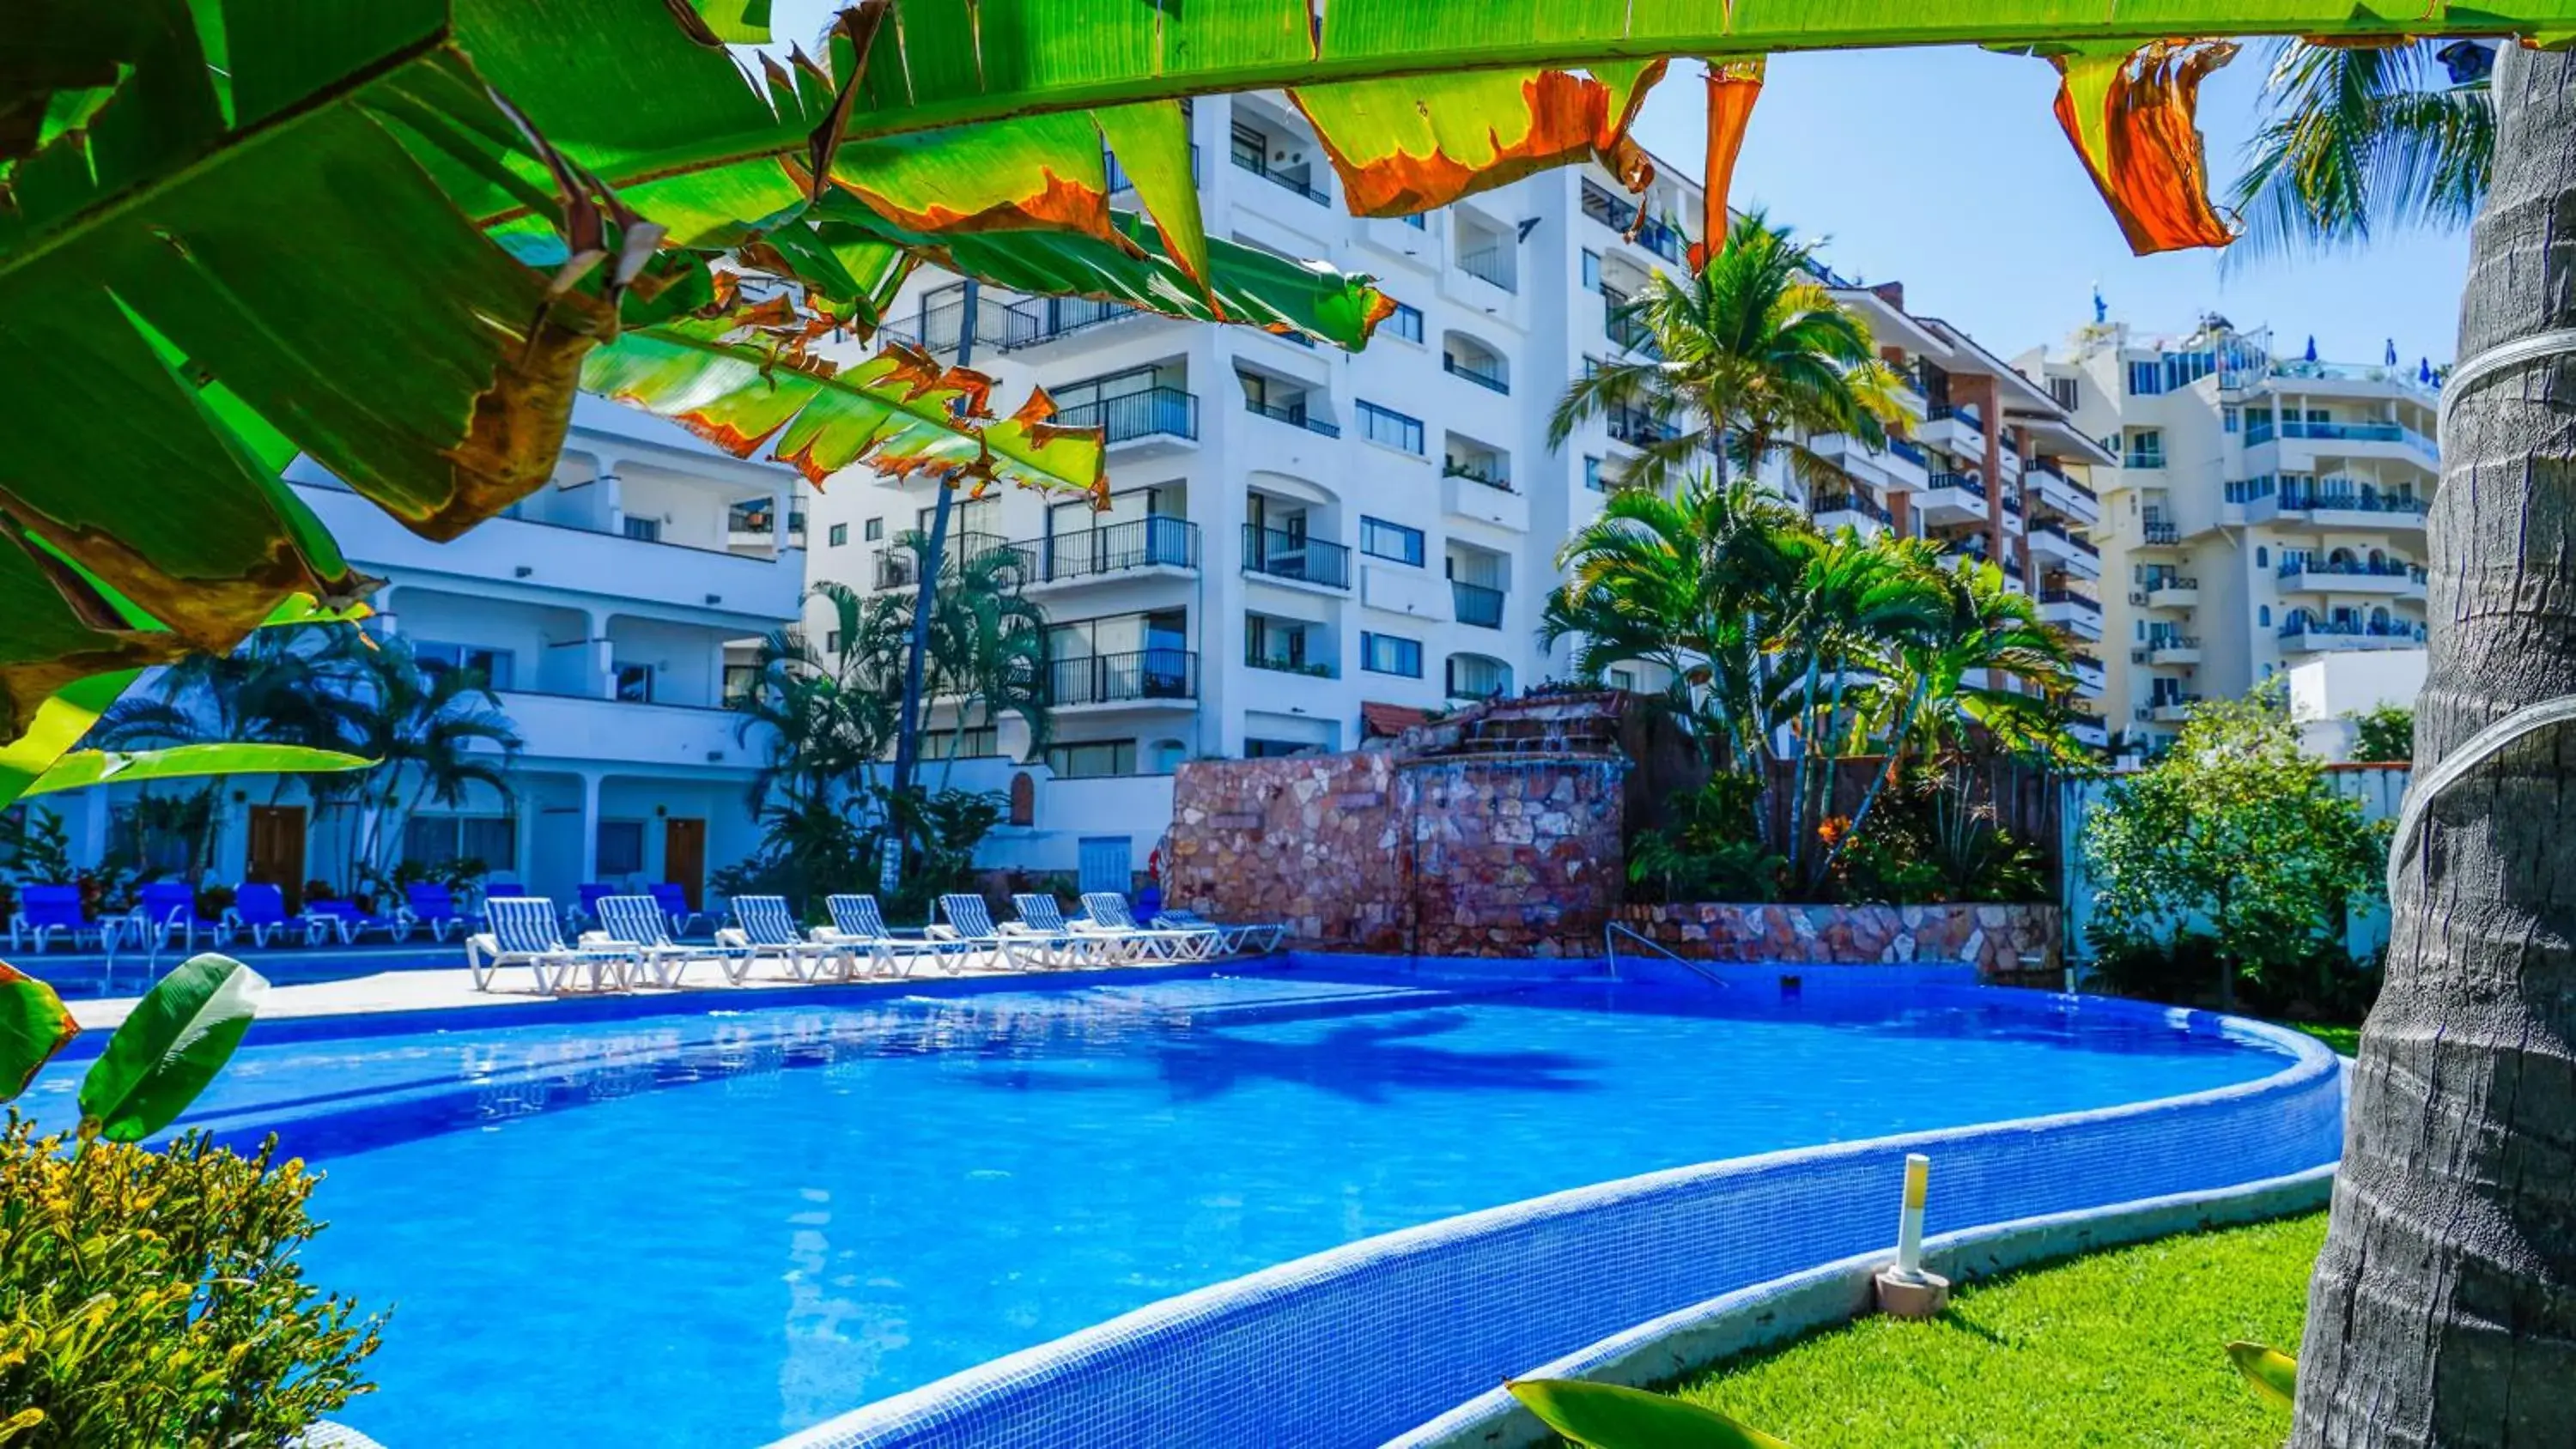 Swimming Pool in Tropicana Hotel Puerto Vallarta